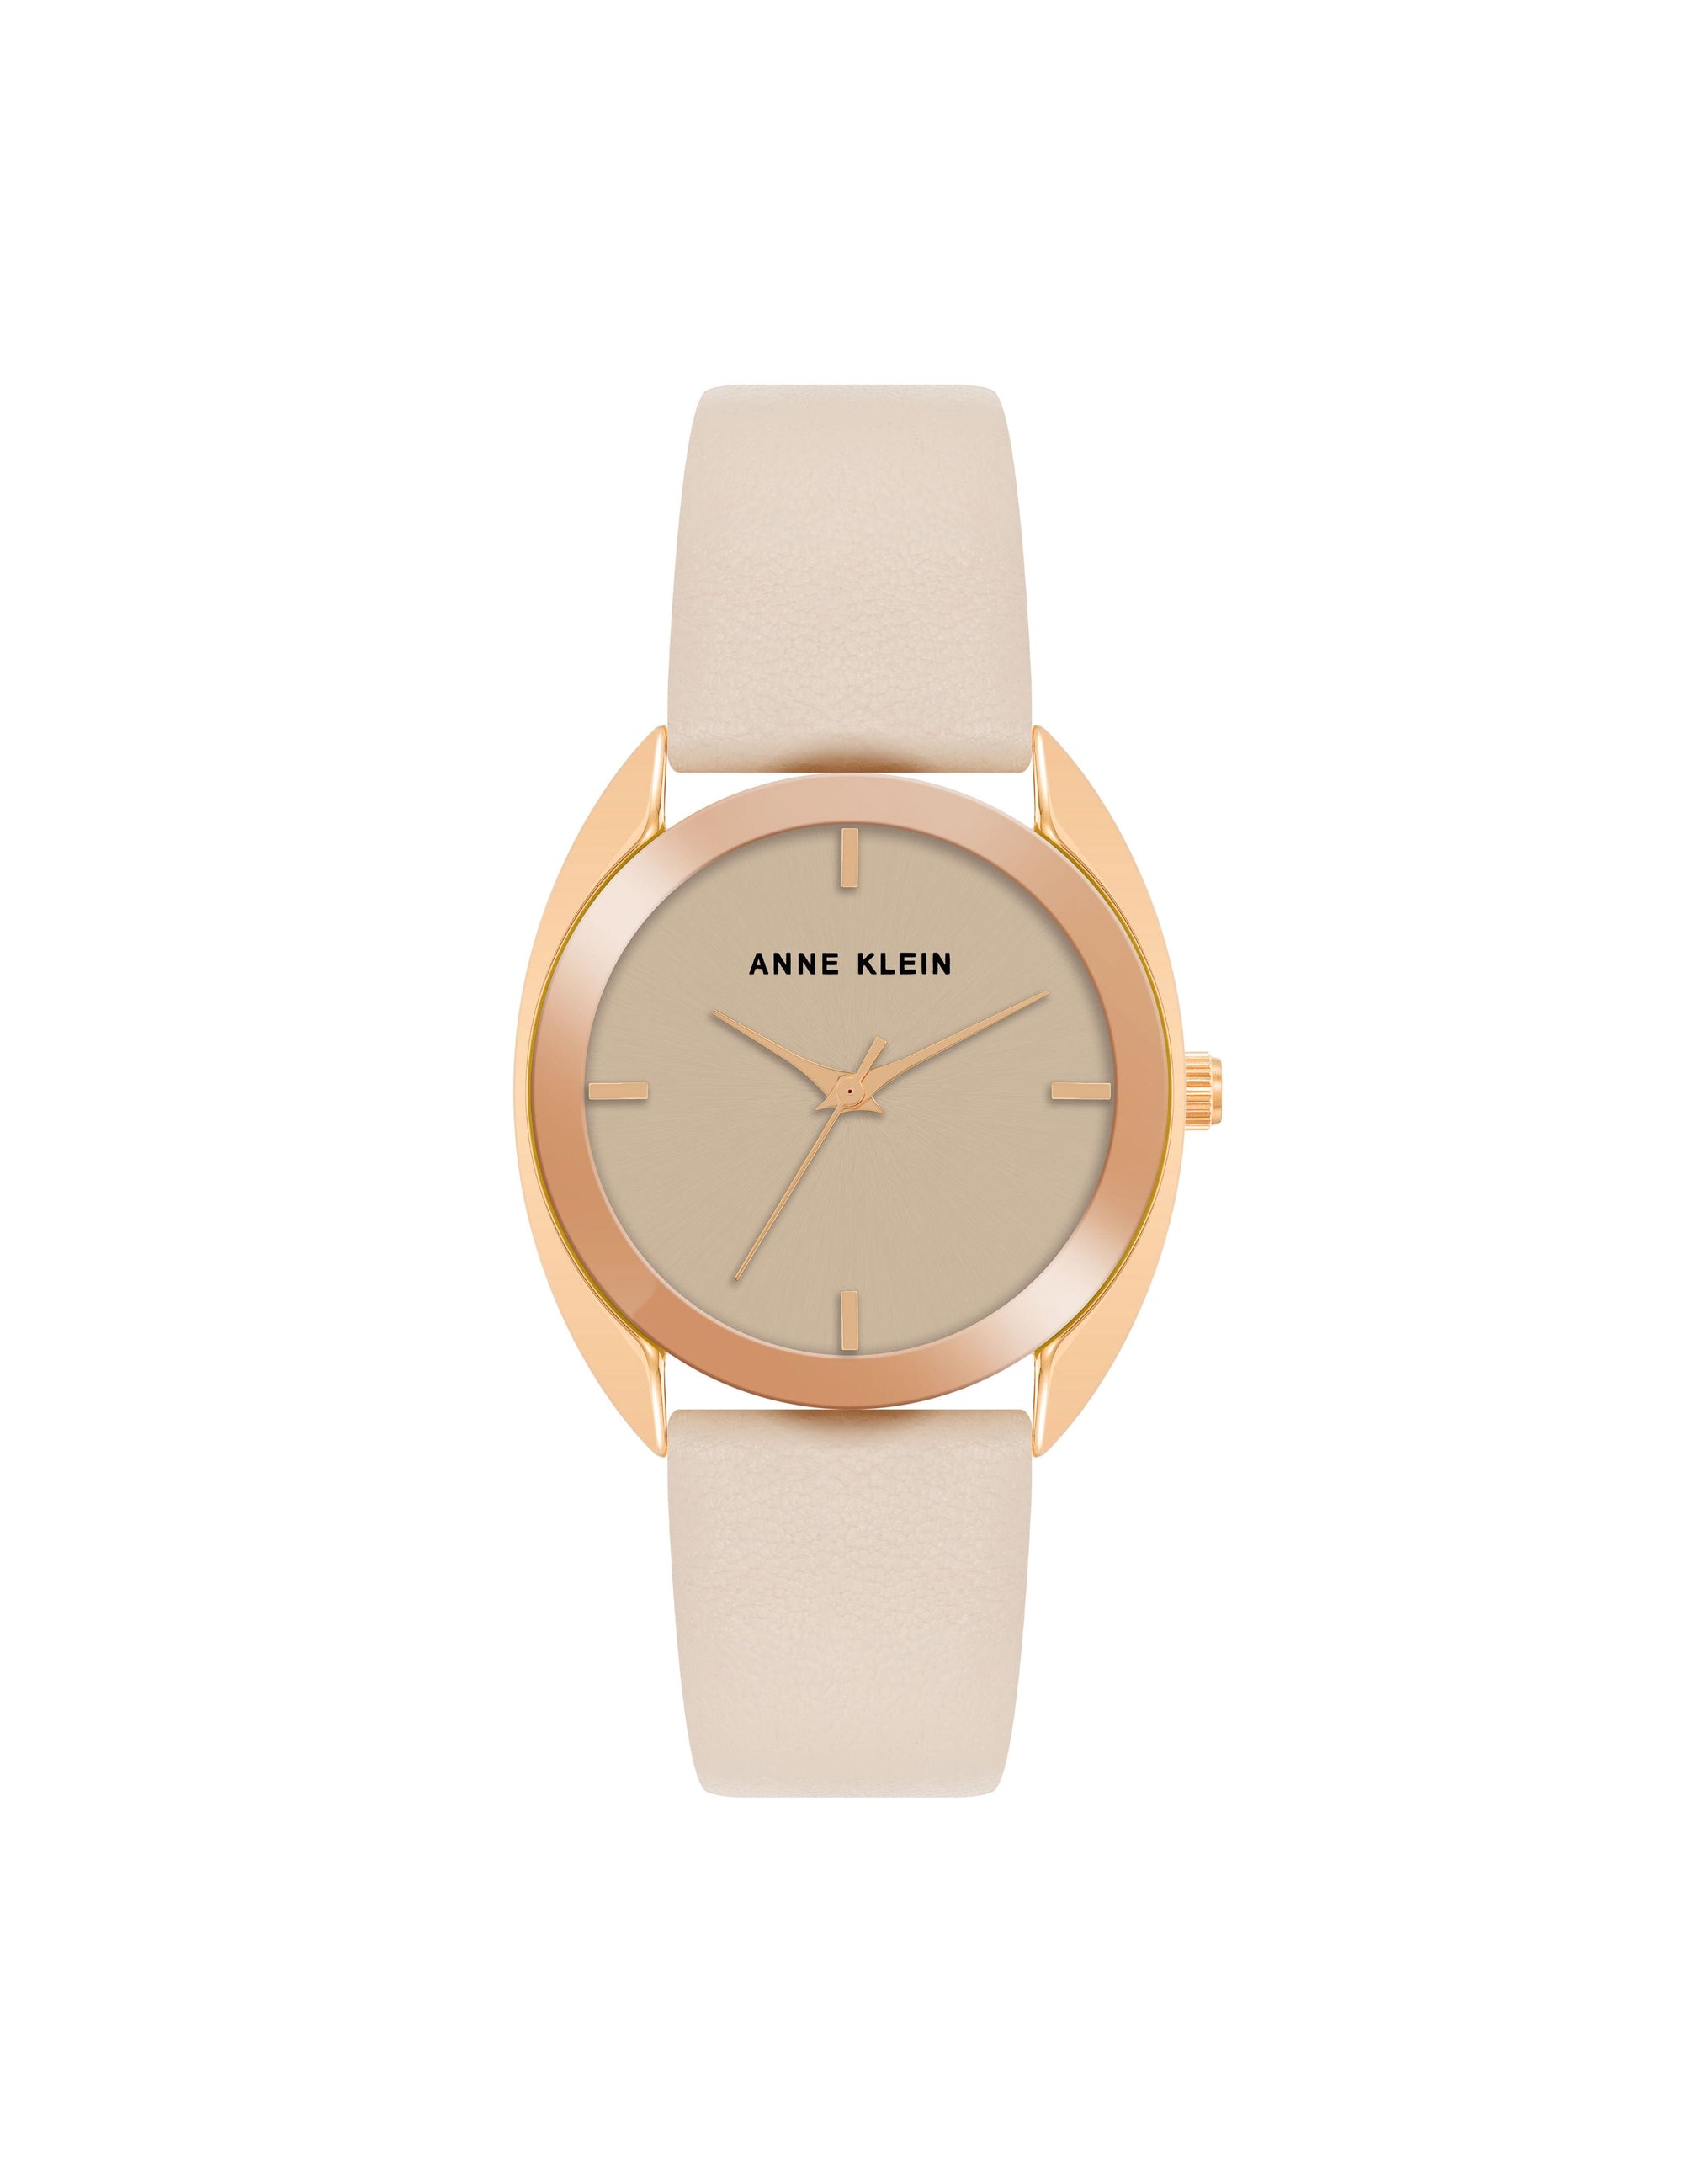 Anne Klein Rose Gold-Tone/ Blush Pink Modern Leather Strap Watch